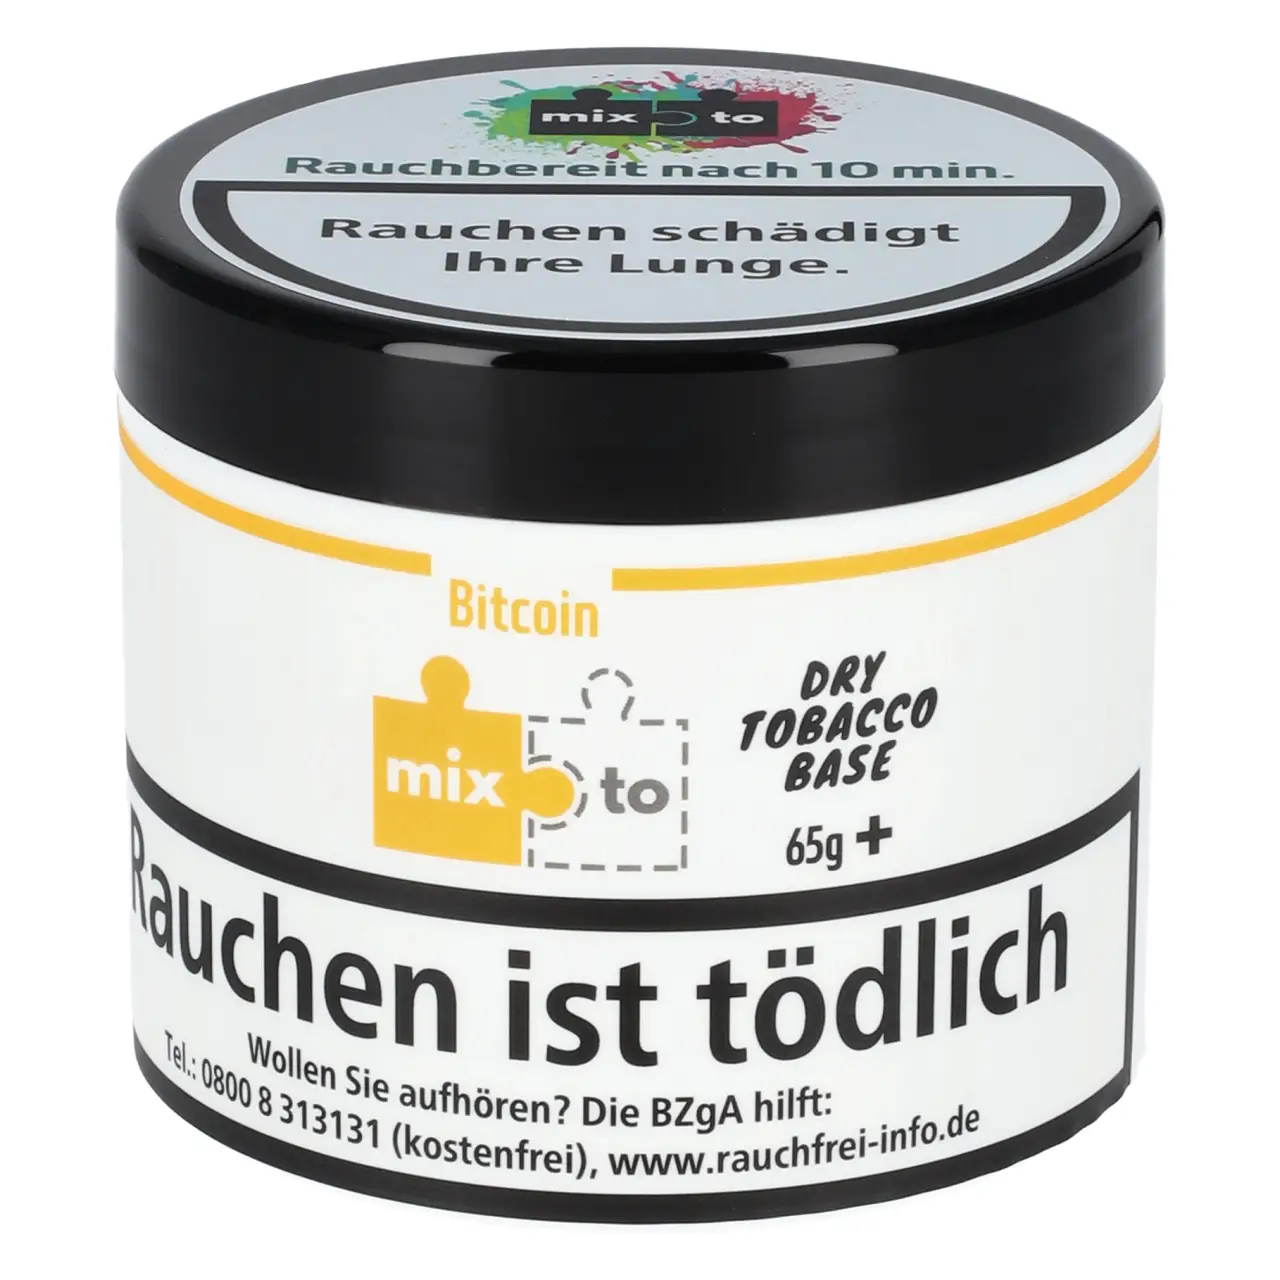 Mixto Dry Tobacco Base Pfeifentabak Bitcoin - gelbe Zitronenbonbons - 65g